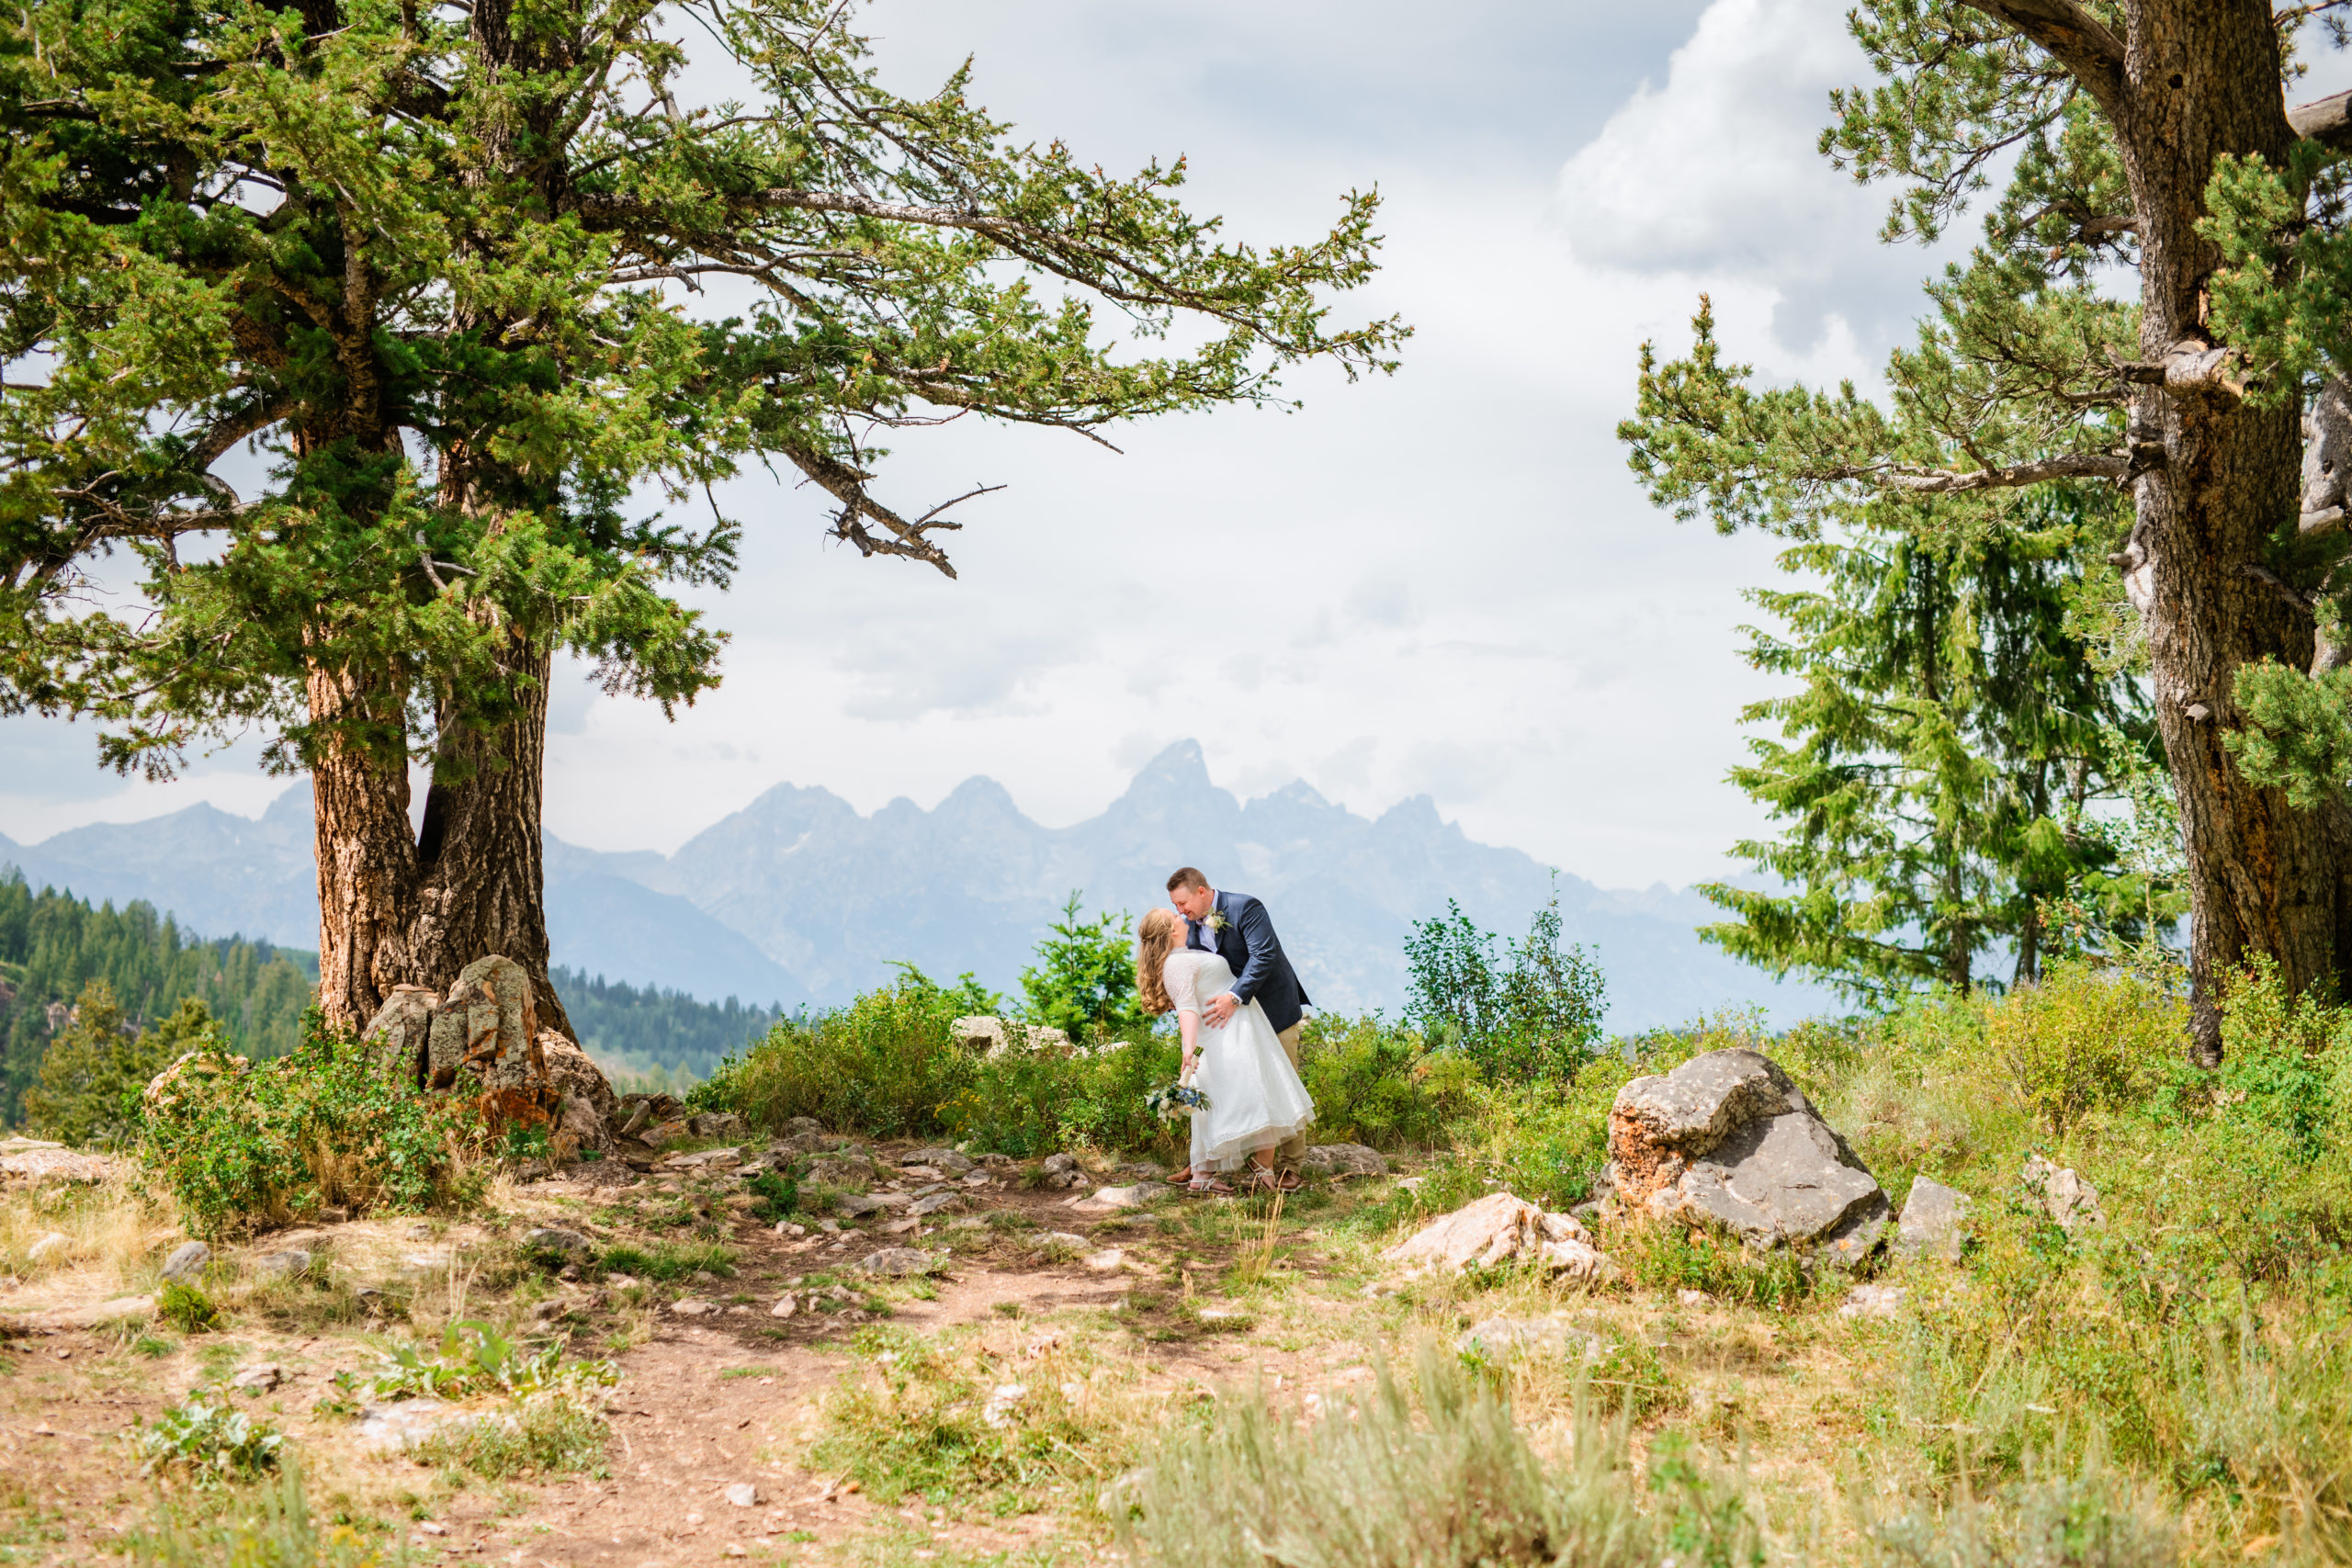 Jackson Hole wedding photographer captures couple dip kiss at wedding tree in Grand Teton National Park wedding